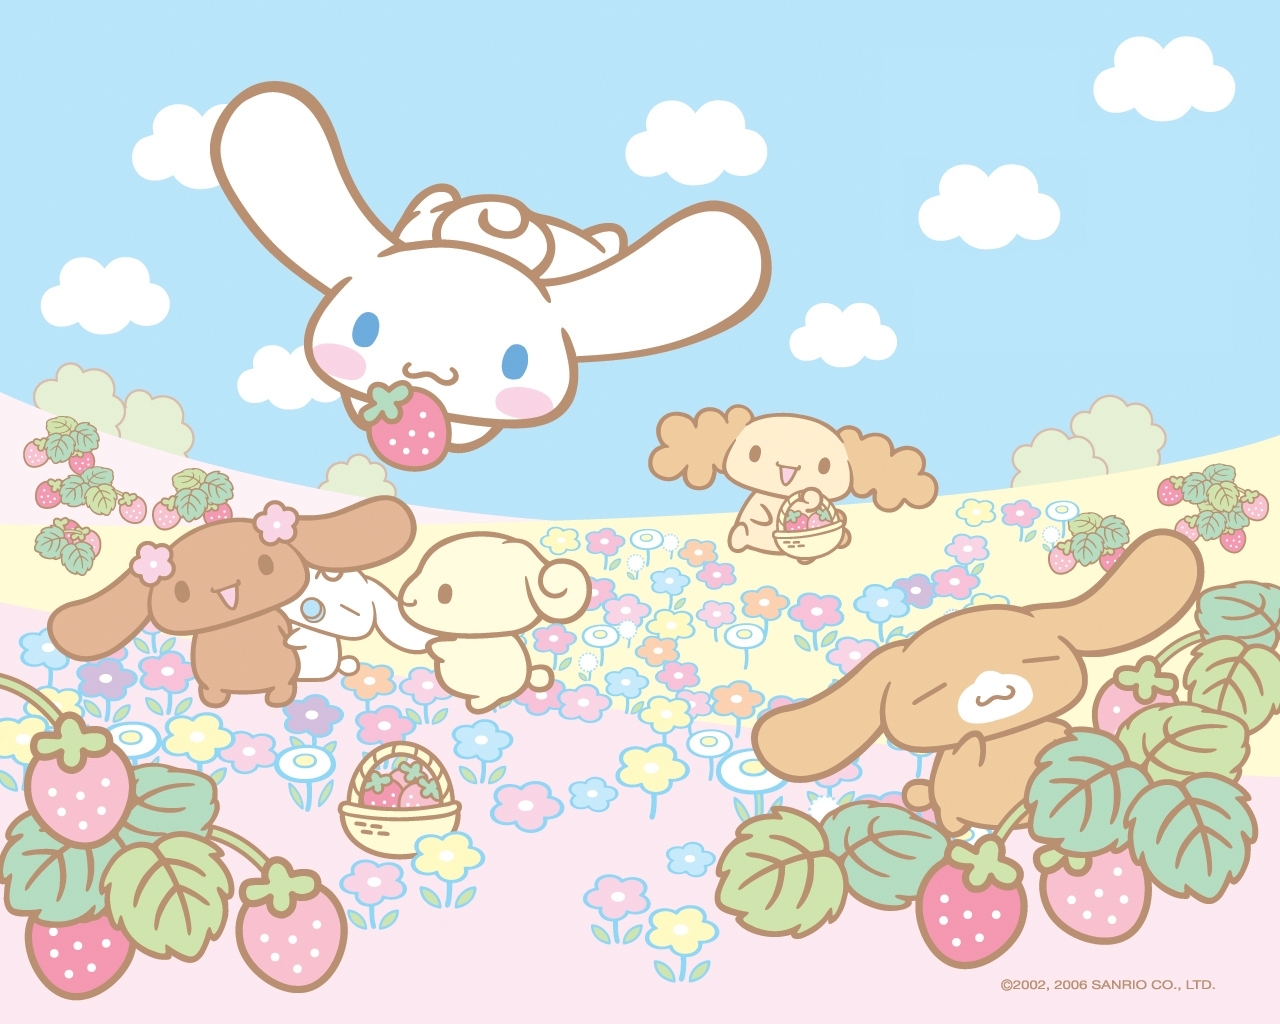 Support Forum Topic Plete Cute Sanrio Background